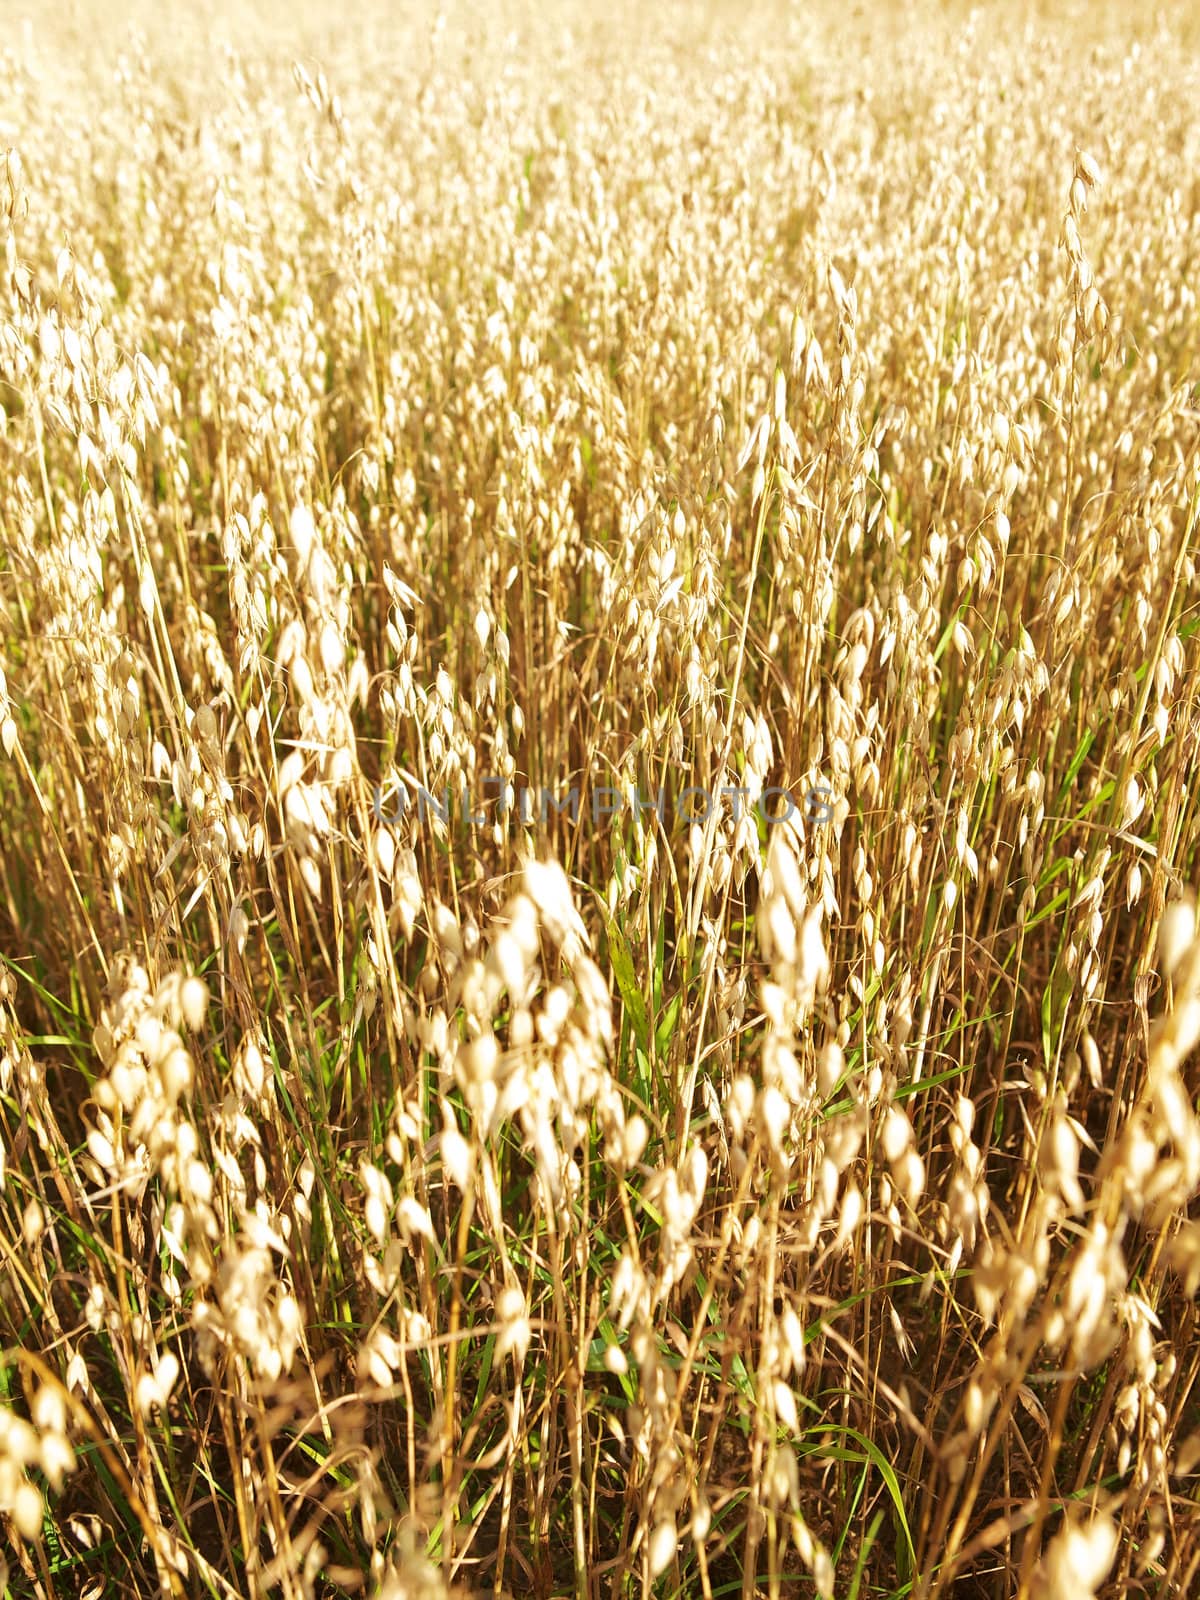 Golden oats field in the autumn season